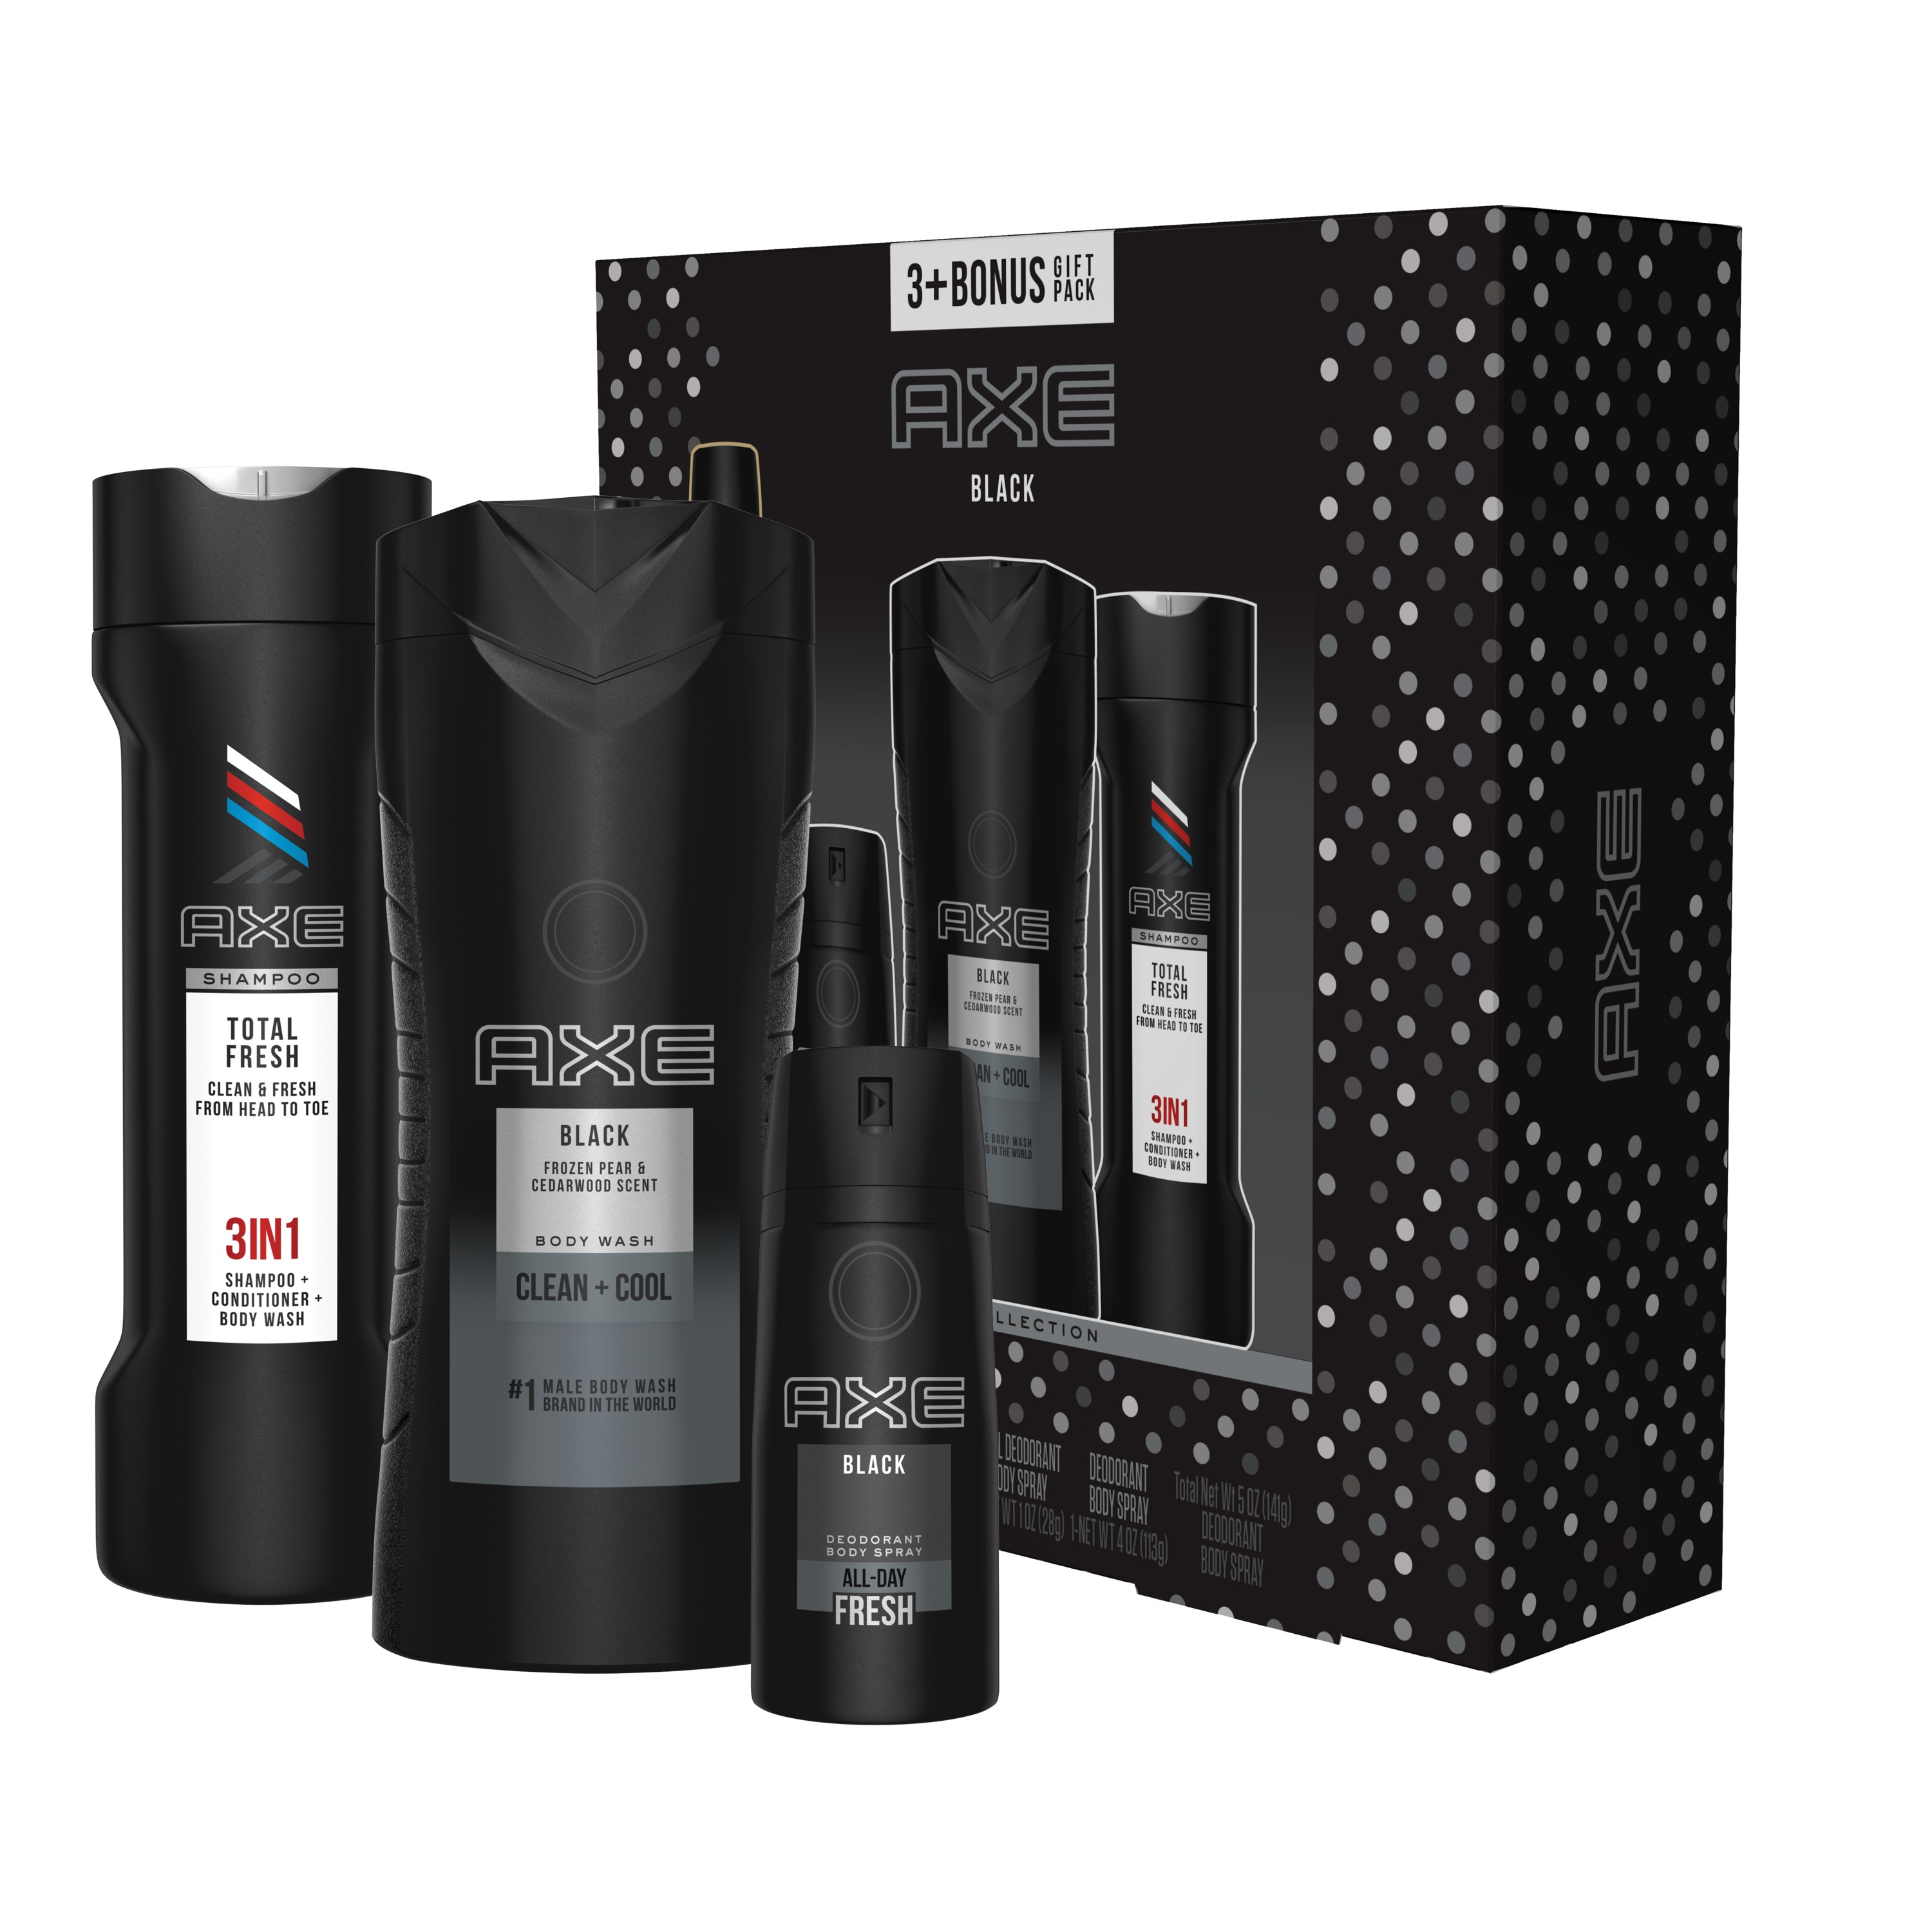 AXE 4-Pc Black Gift Set with BONUS Trial Deo Body Spray (Body Spray, Body Wash, 3 in 1 Shampoo + Conditioner + Body Wash) - image 1 of 8